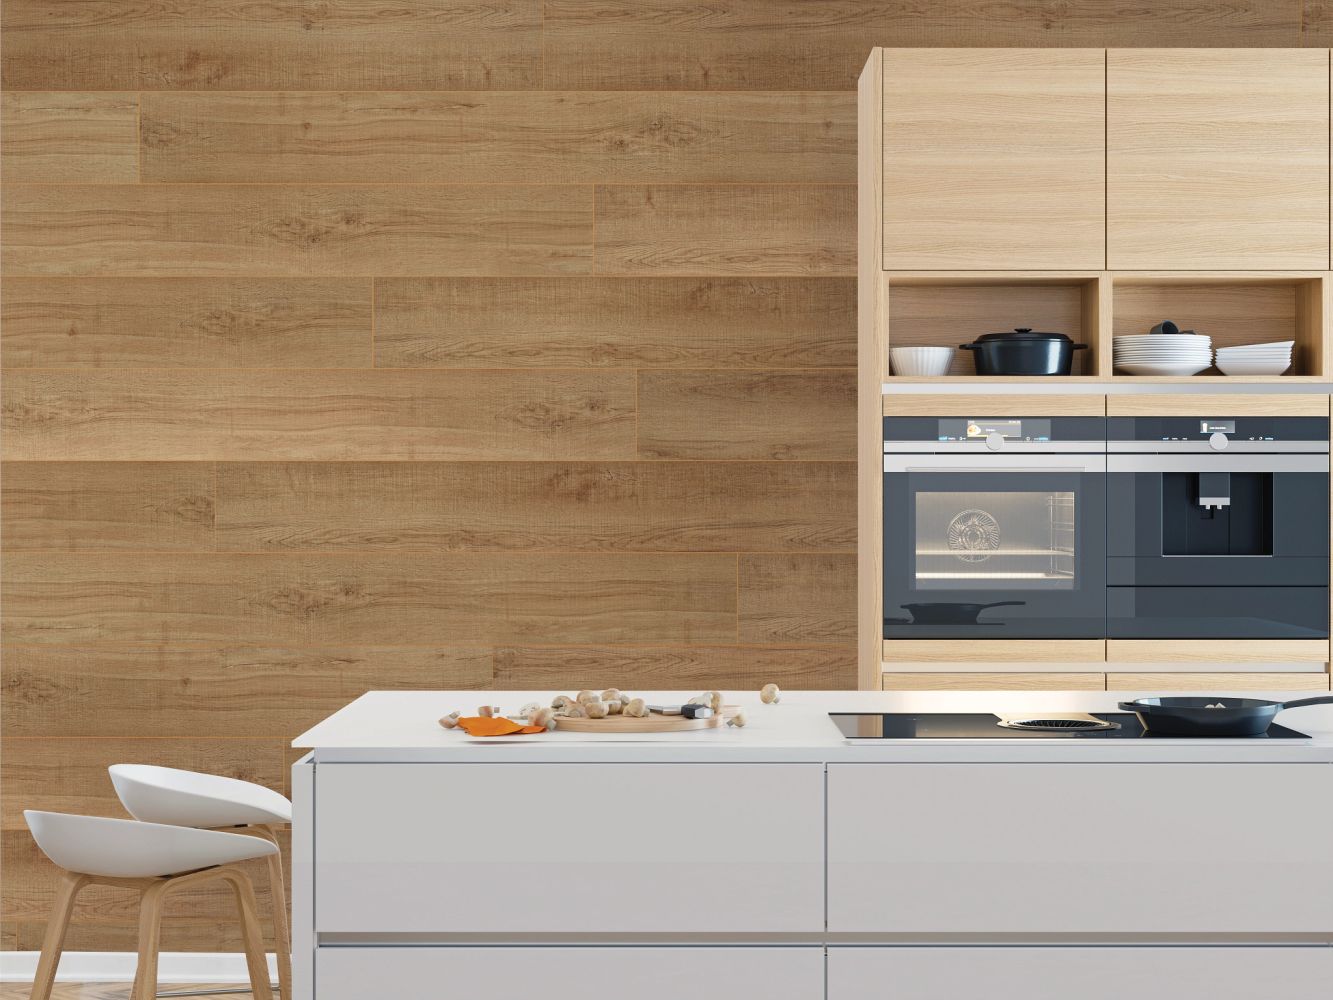 Shaw Floors Resilient Residential COREtec Plus Enhanced XL Waddington Oak 00915_VV035